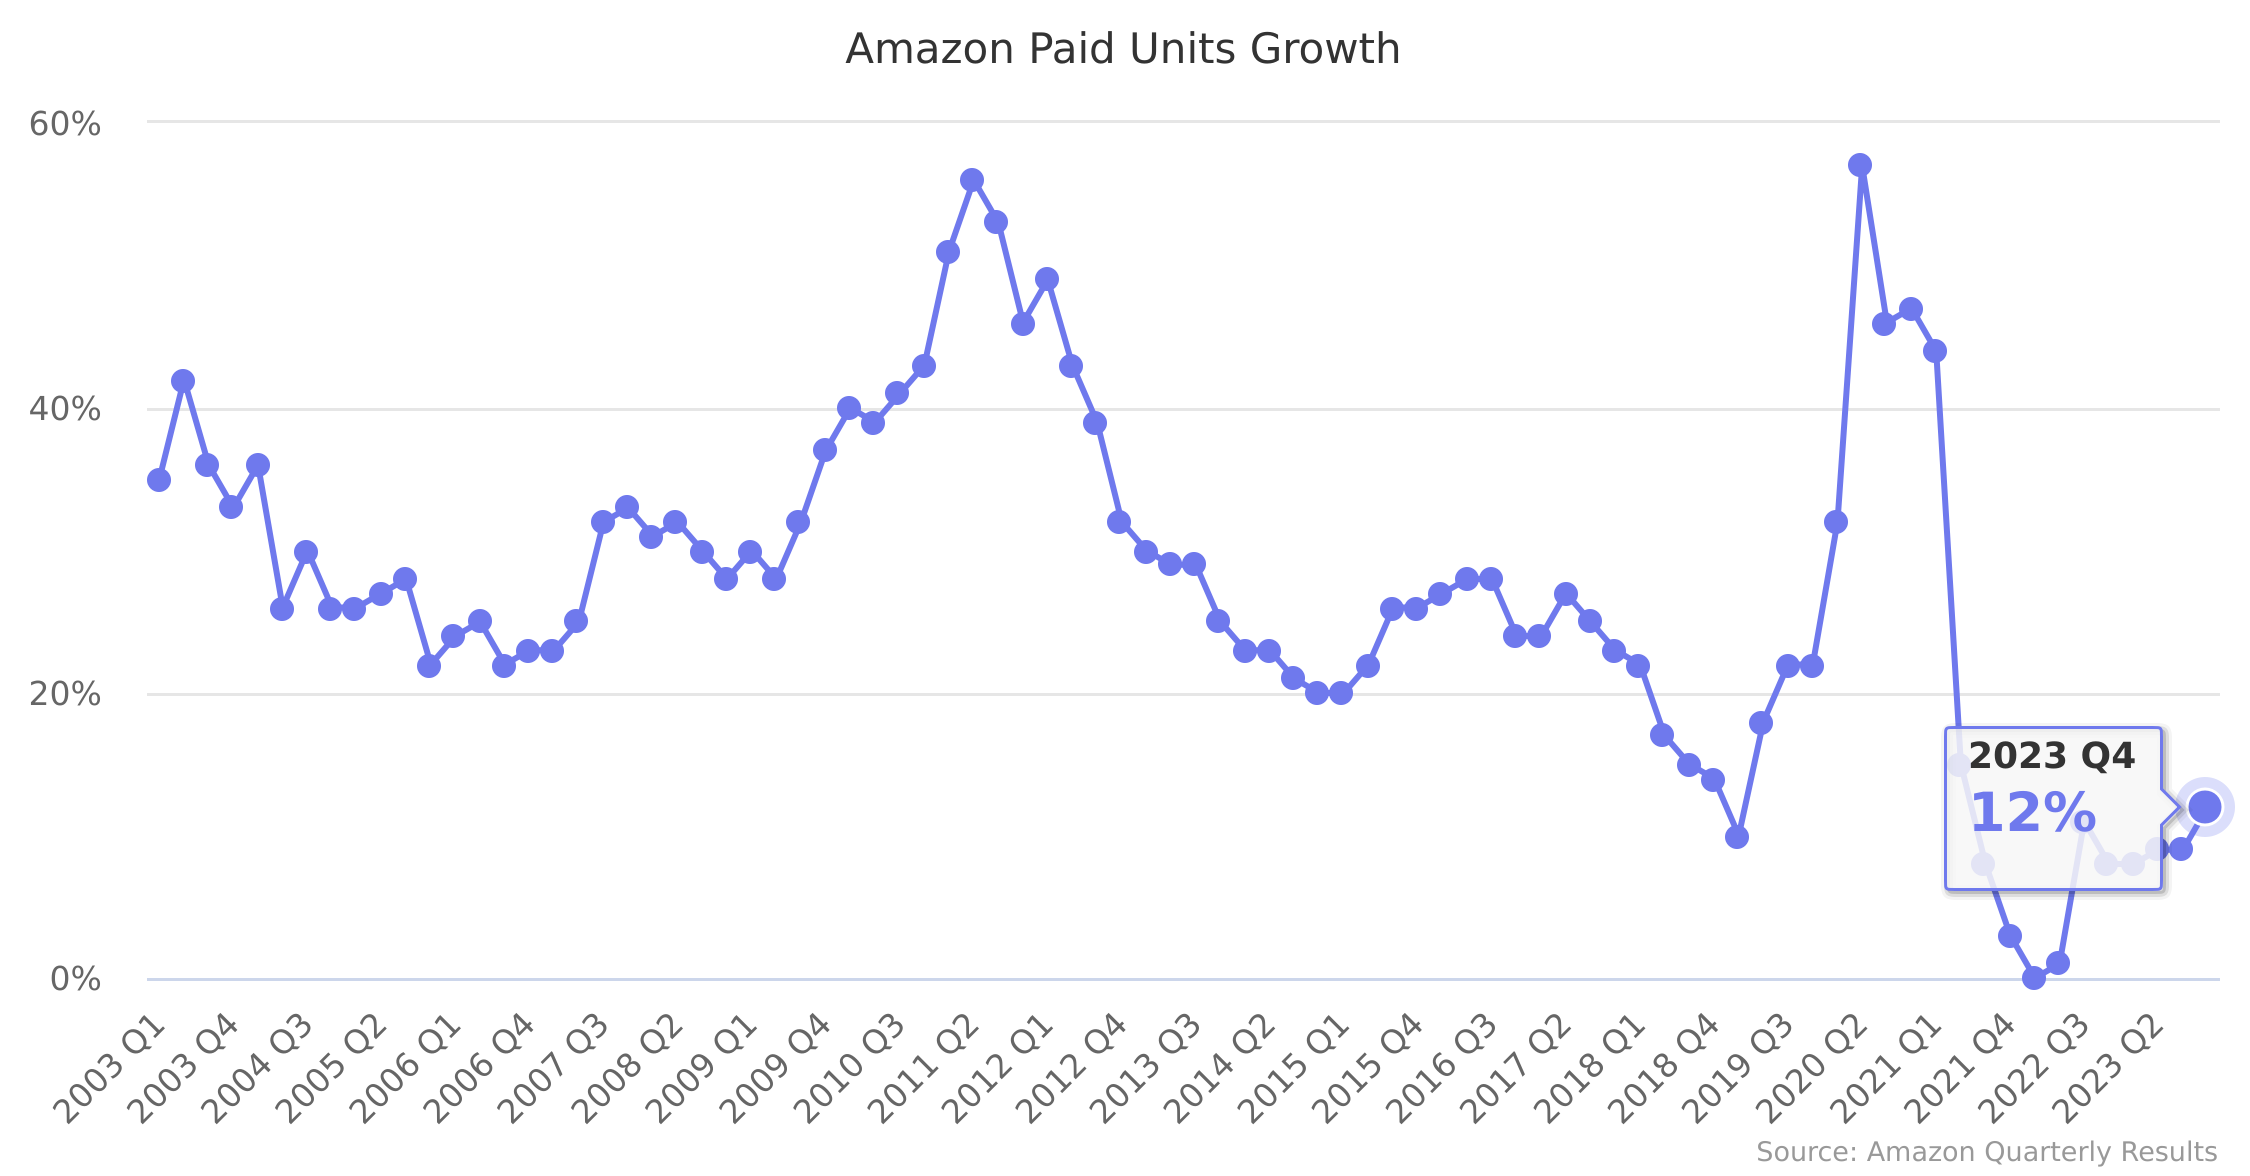 Amazon Paid Units Growth